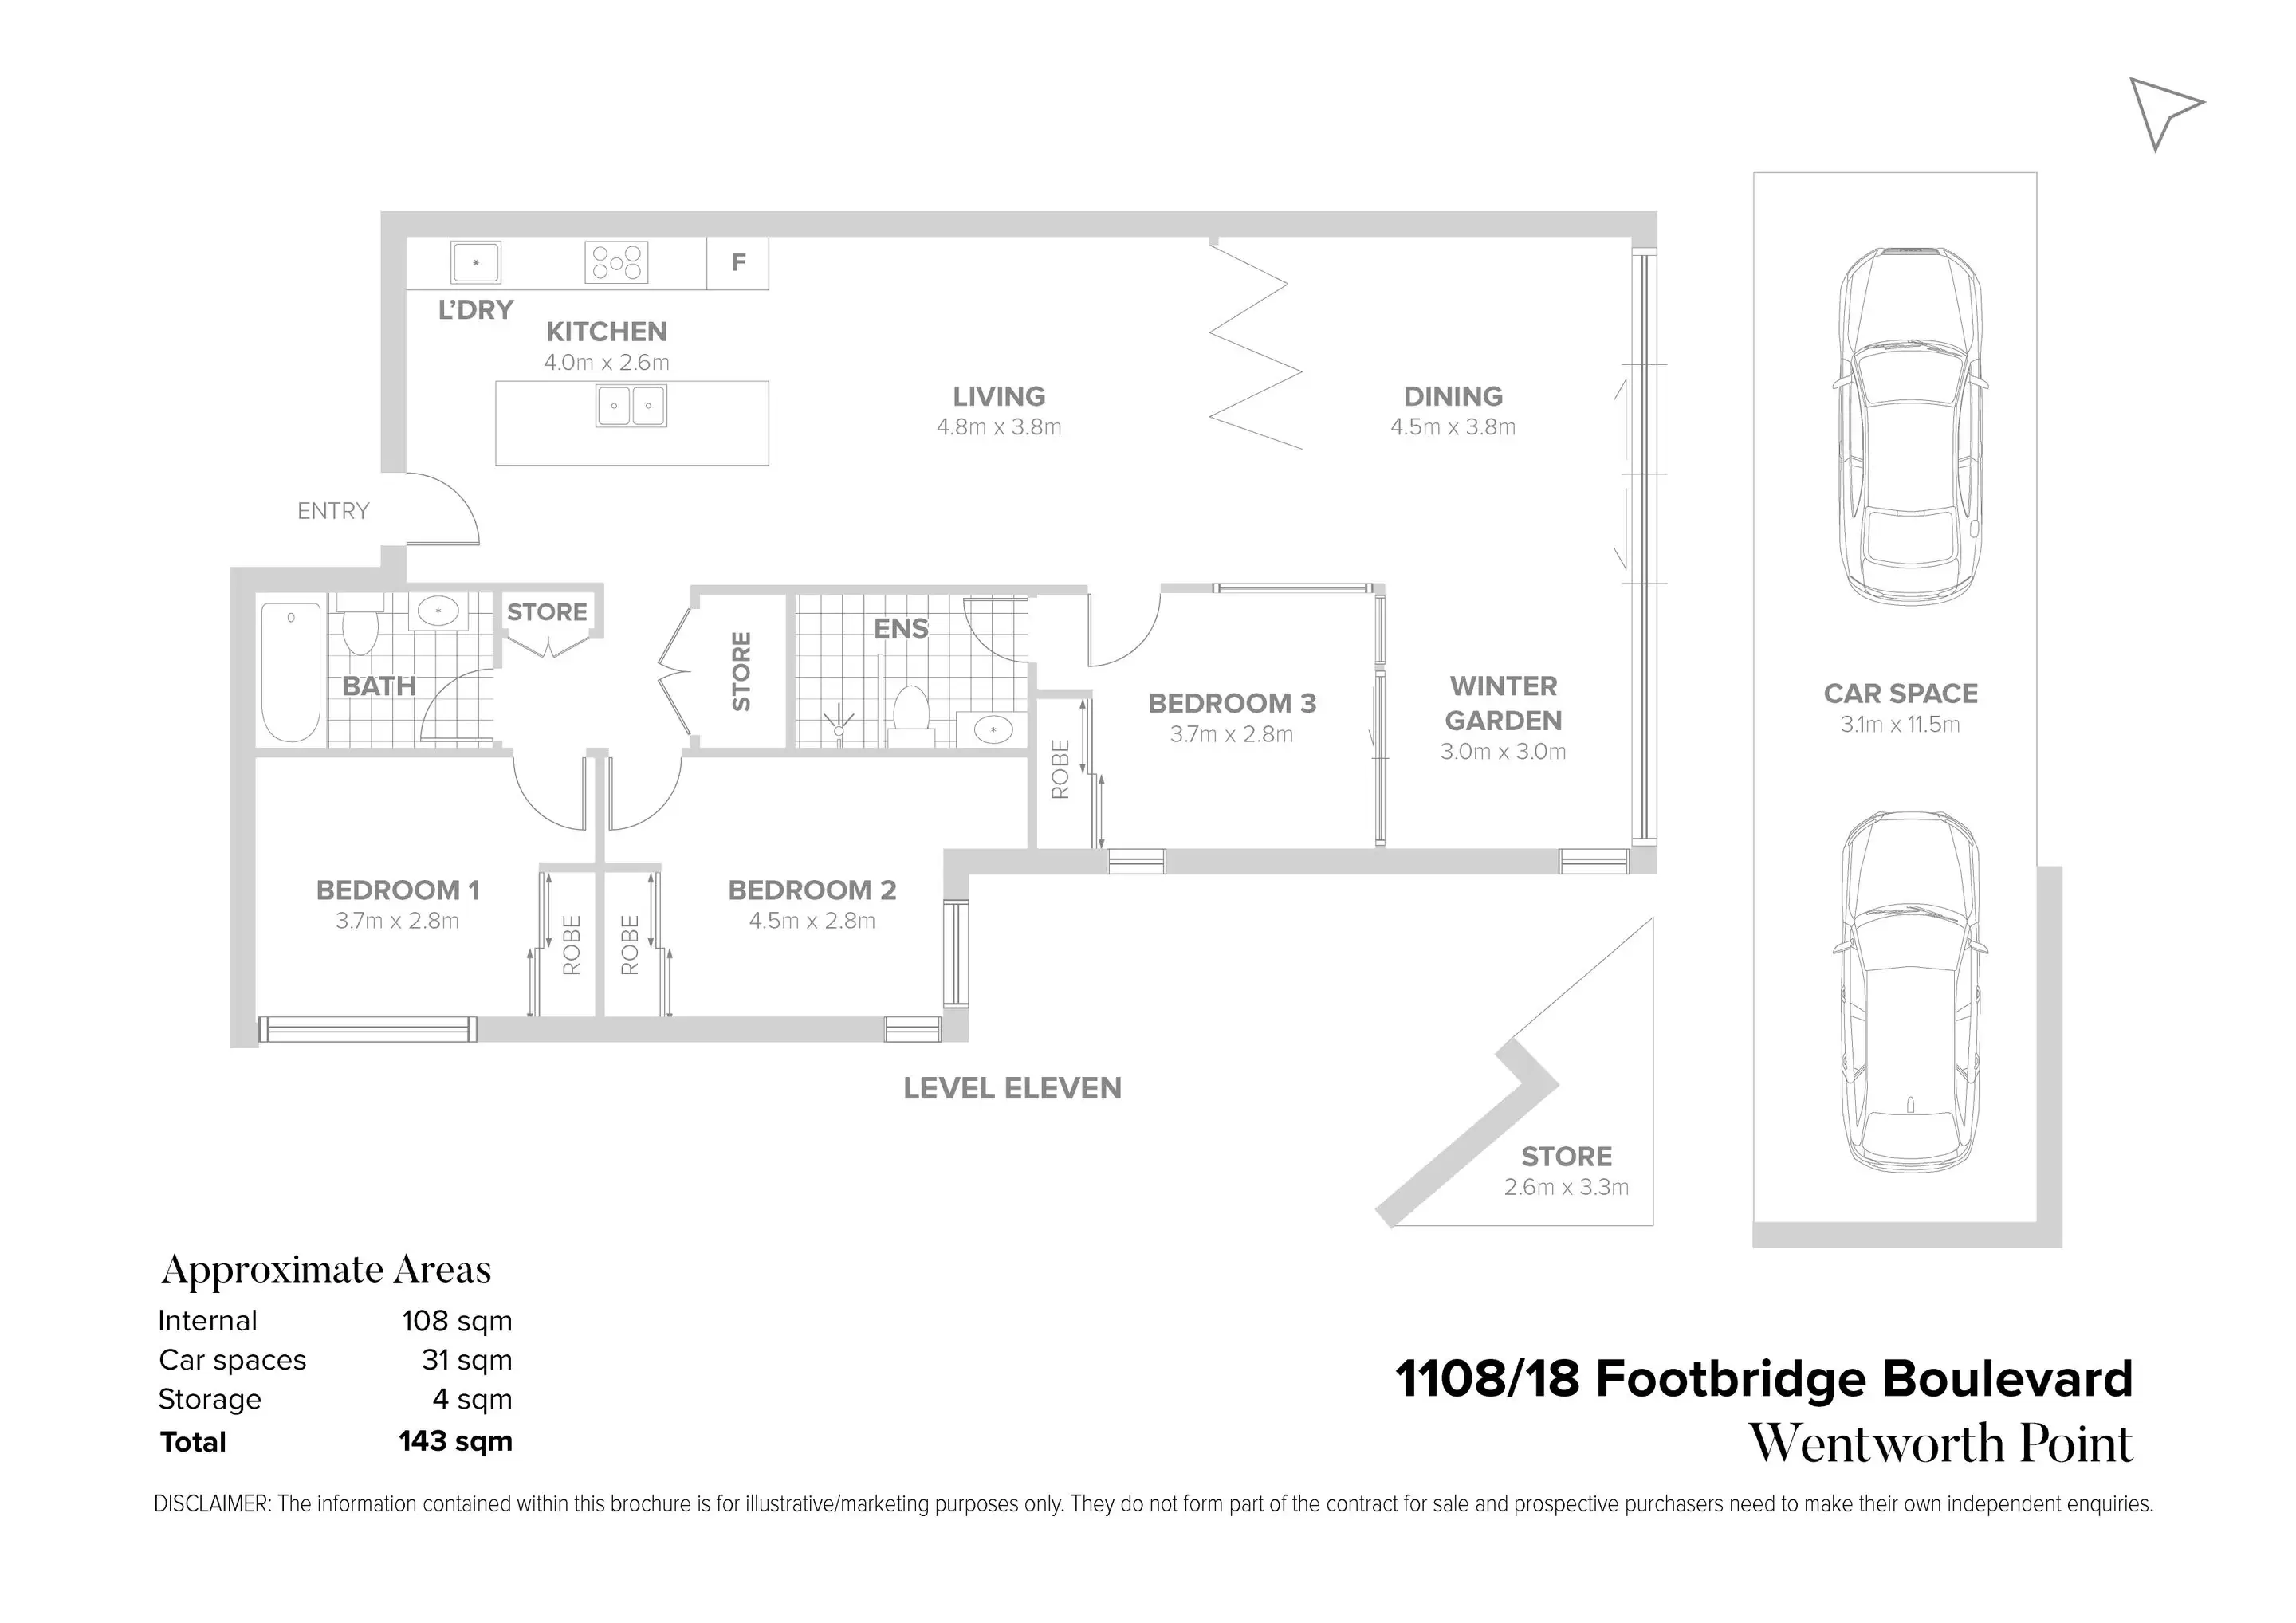 1108/18 Footbridge Boulevard, Wentworth Point Sold by Chidiac Realty - floorplan